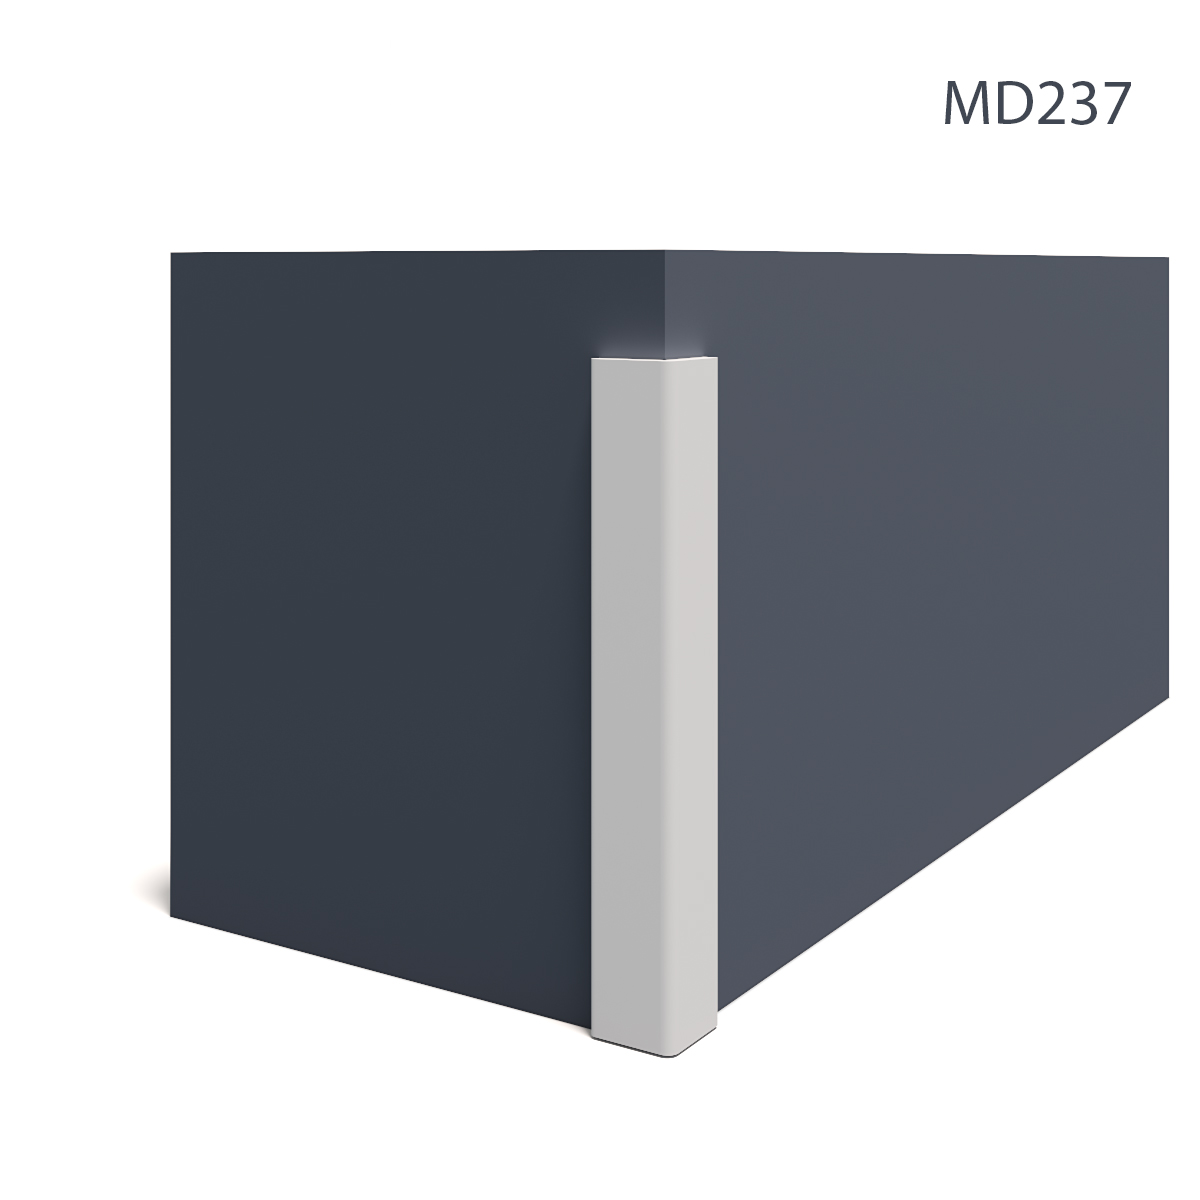 Brauri decorative Mardom Decor MRD-MD237, material: PolyForce